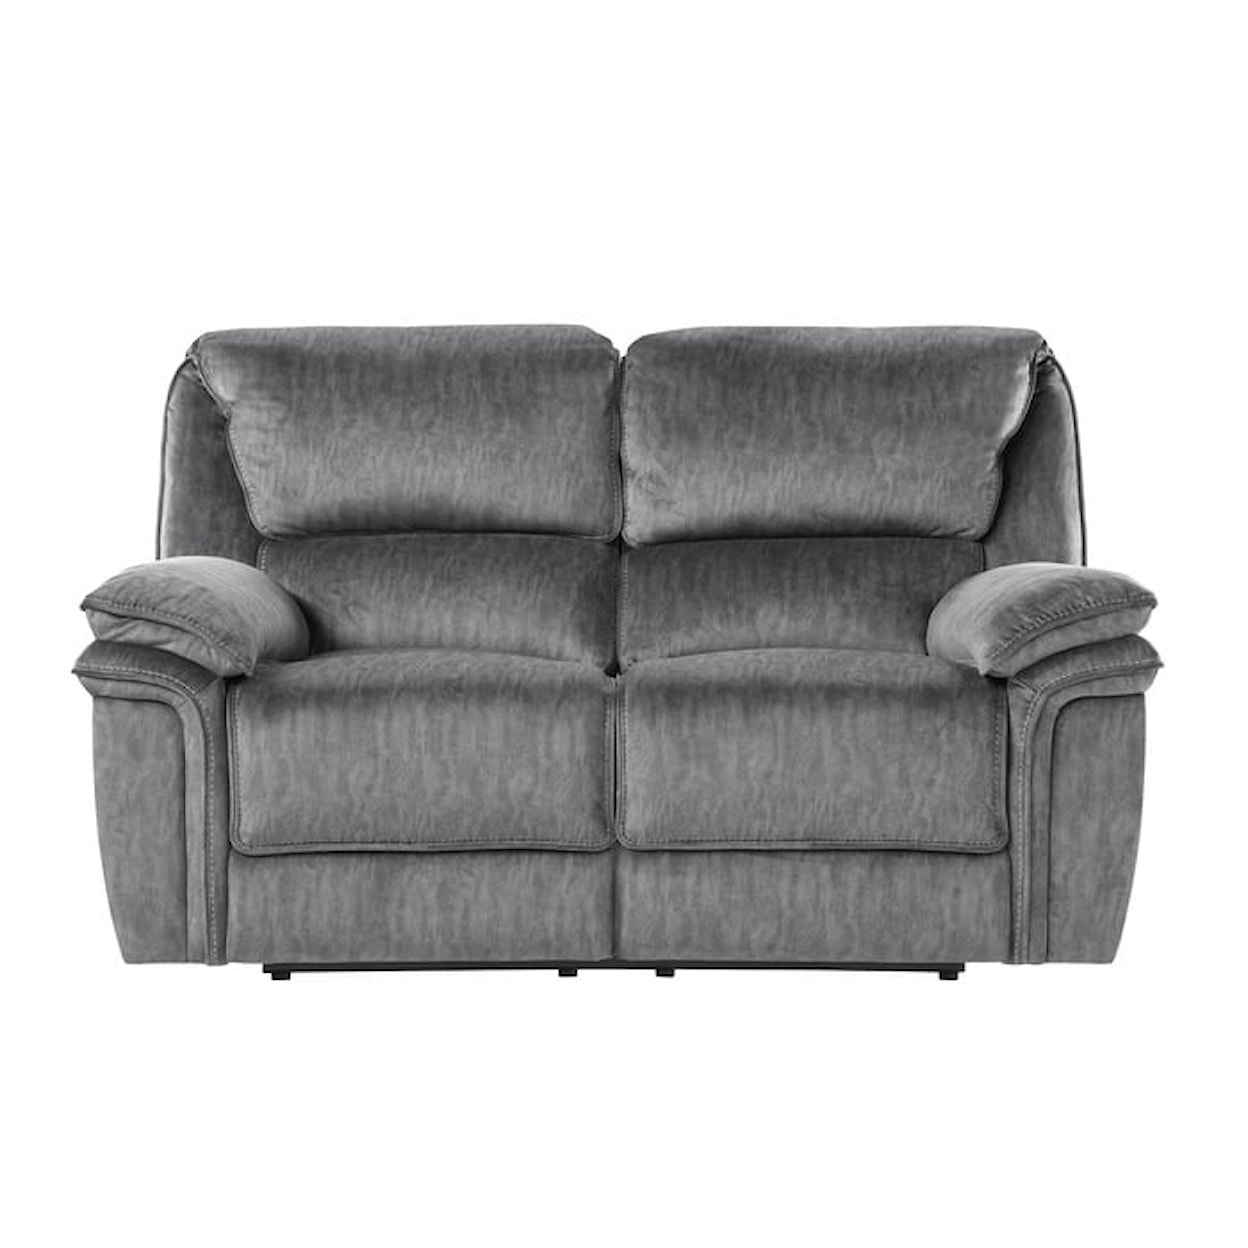 Homelegance Furniture Muirfield 2Pc Set: Love, Chair